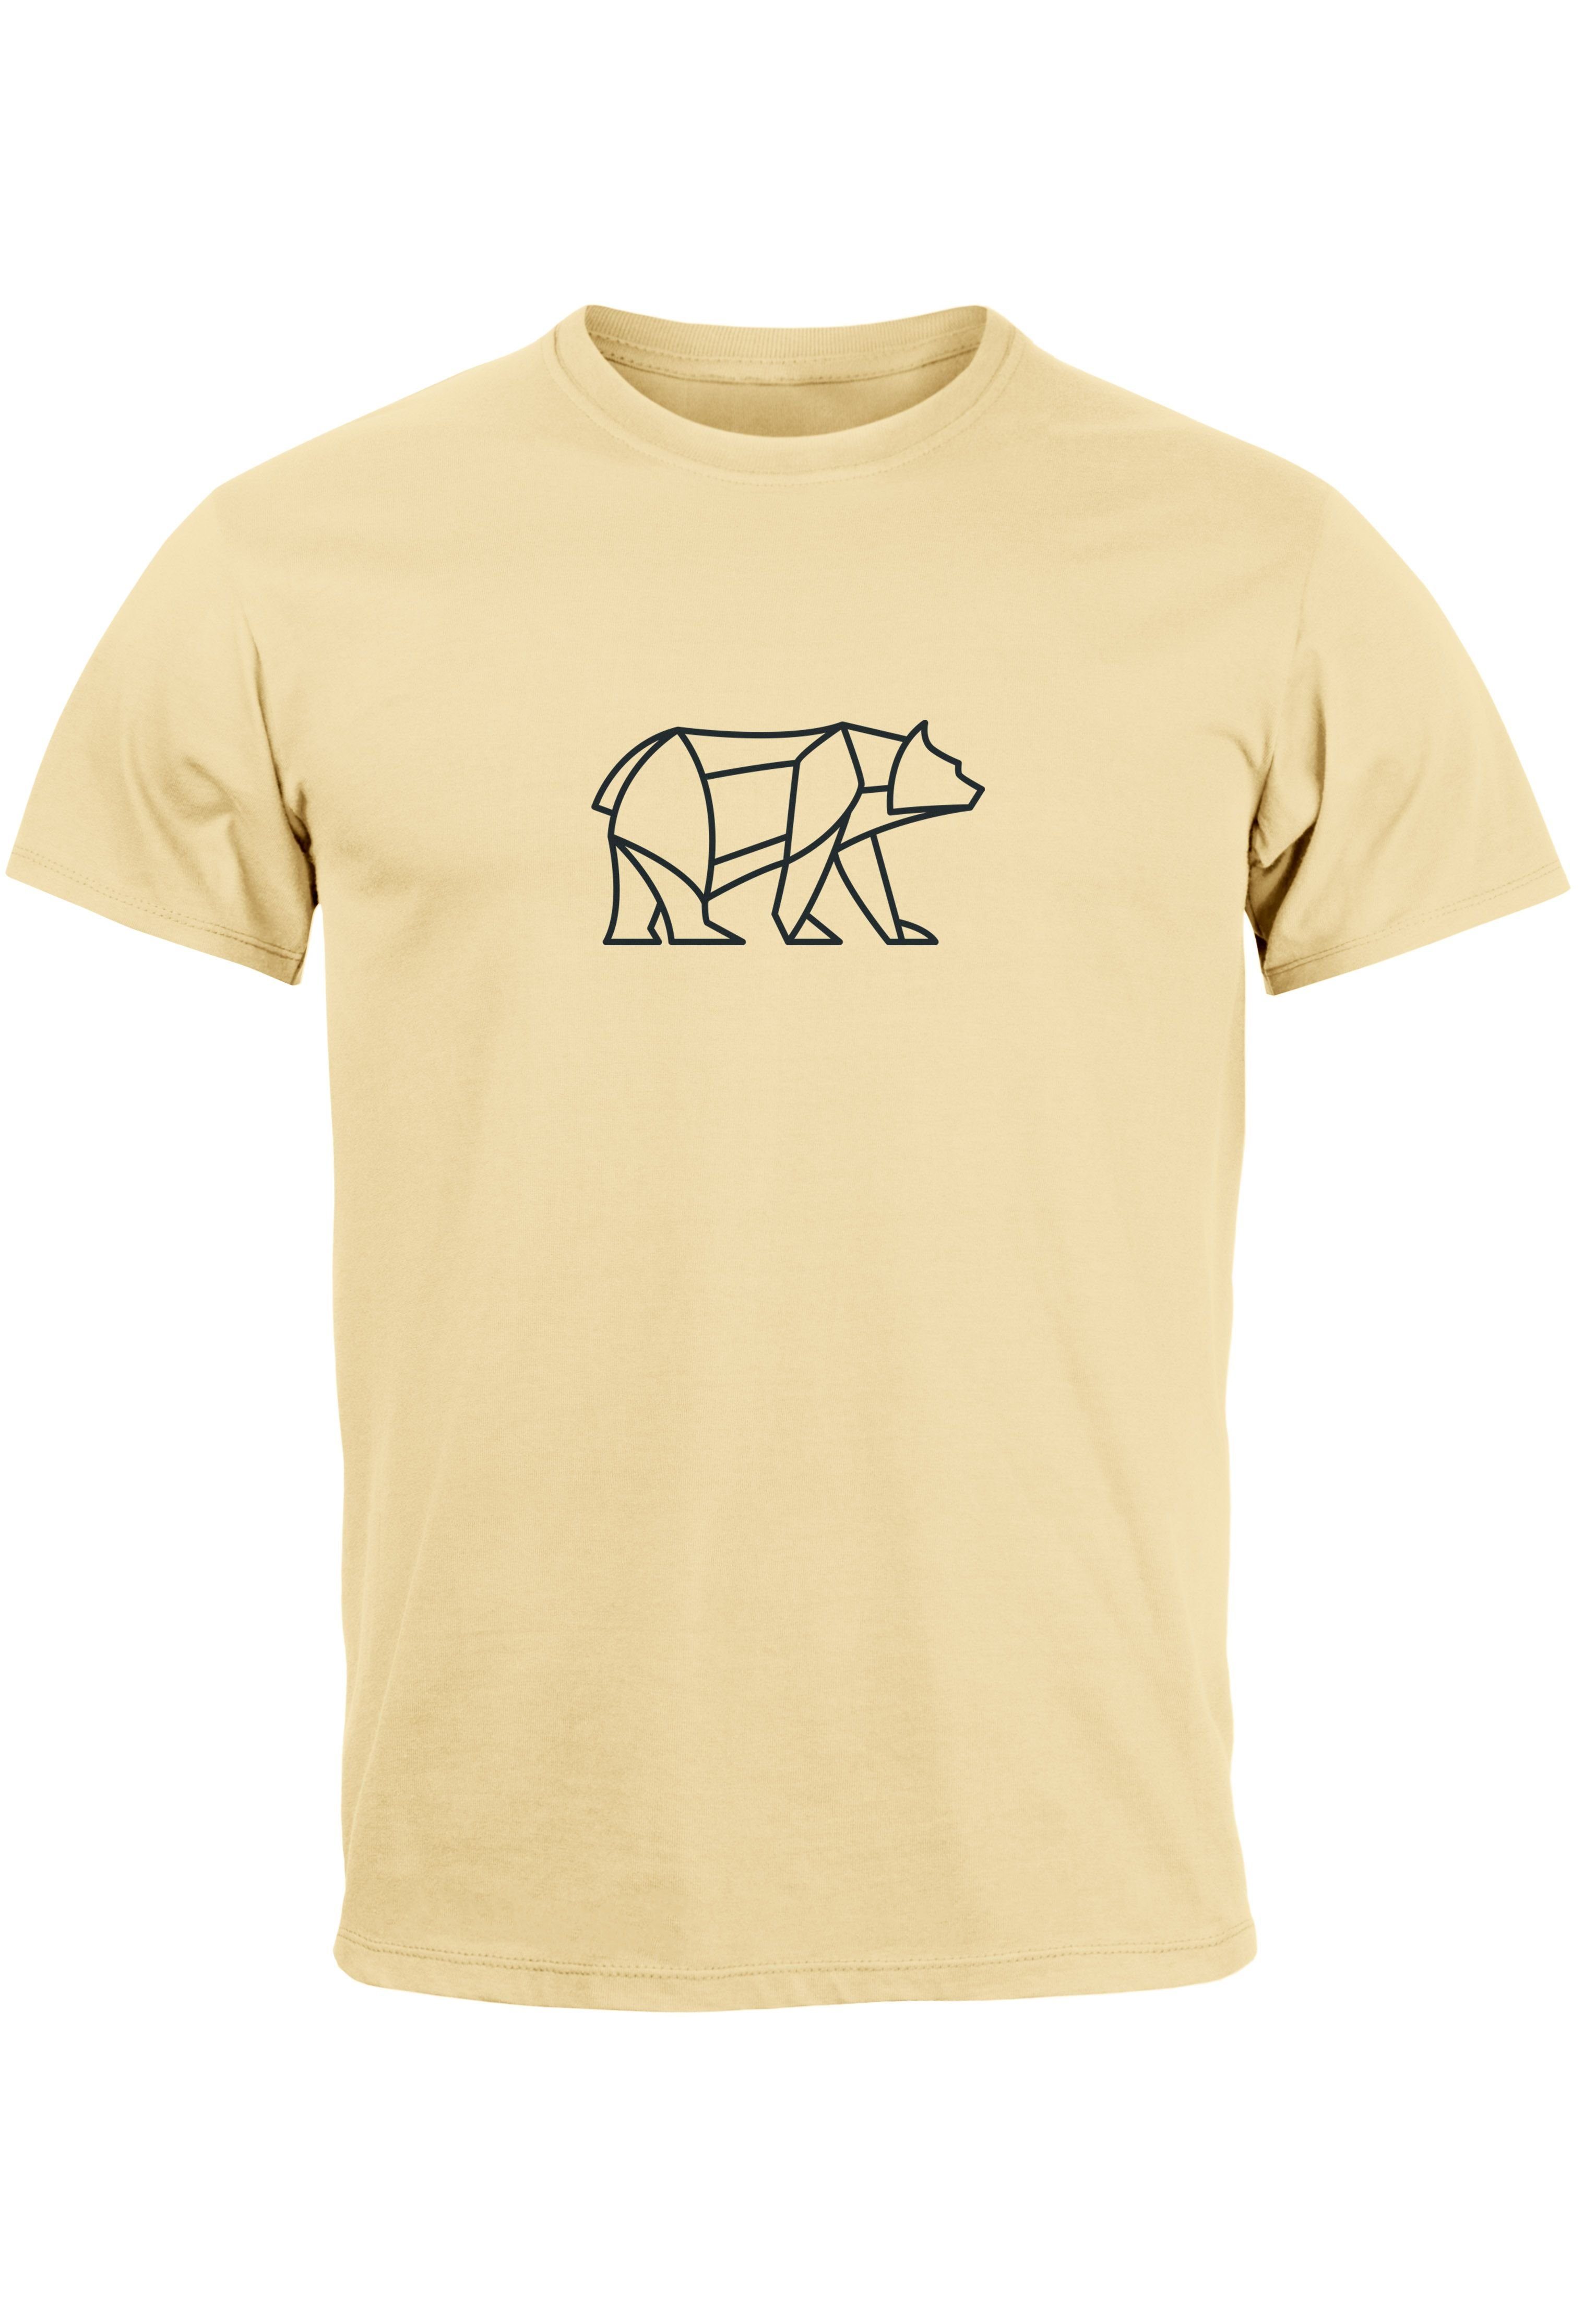 Bär Print-Shirt Neverless Outdoor Polygon mit Polygon Print natur Tiermotiv Fashion Design Bear T-Shirt Print Herren 2